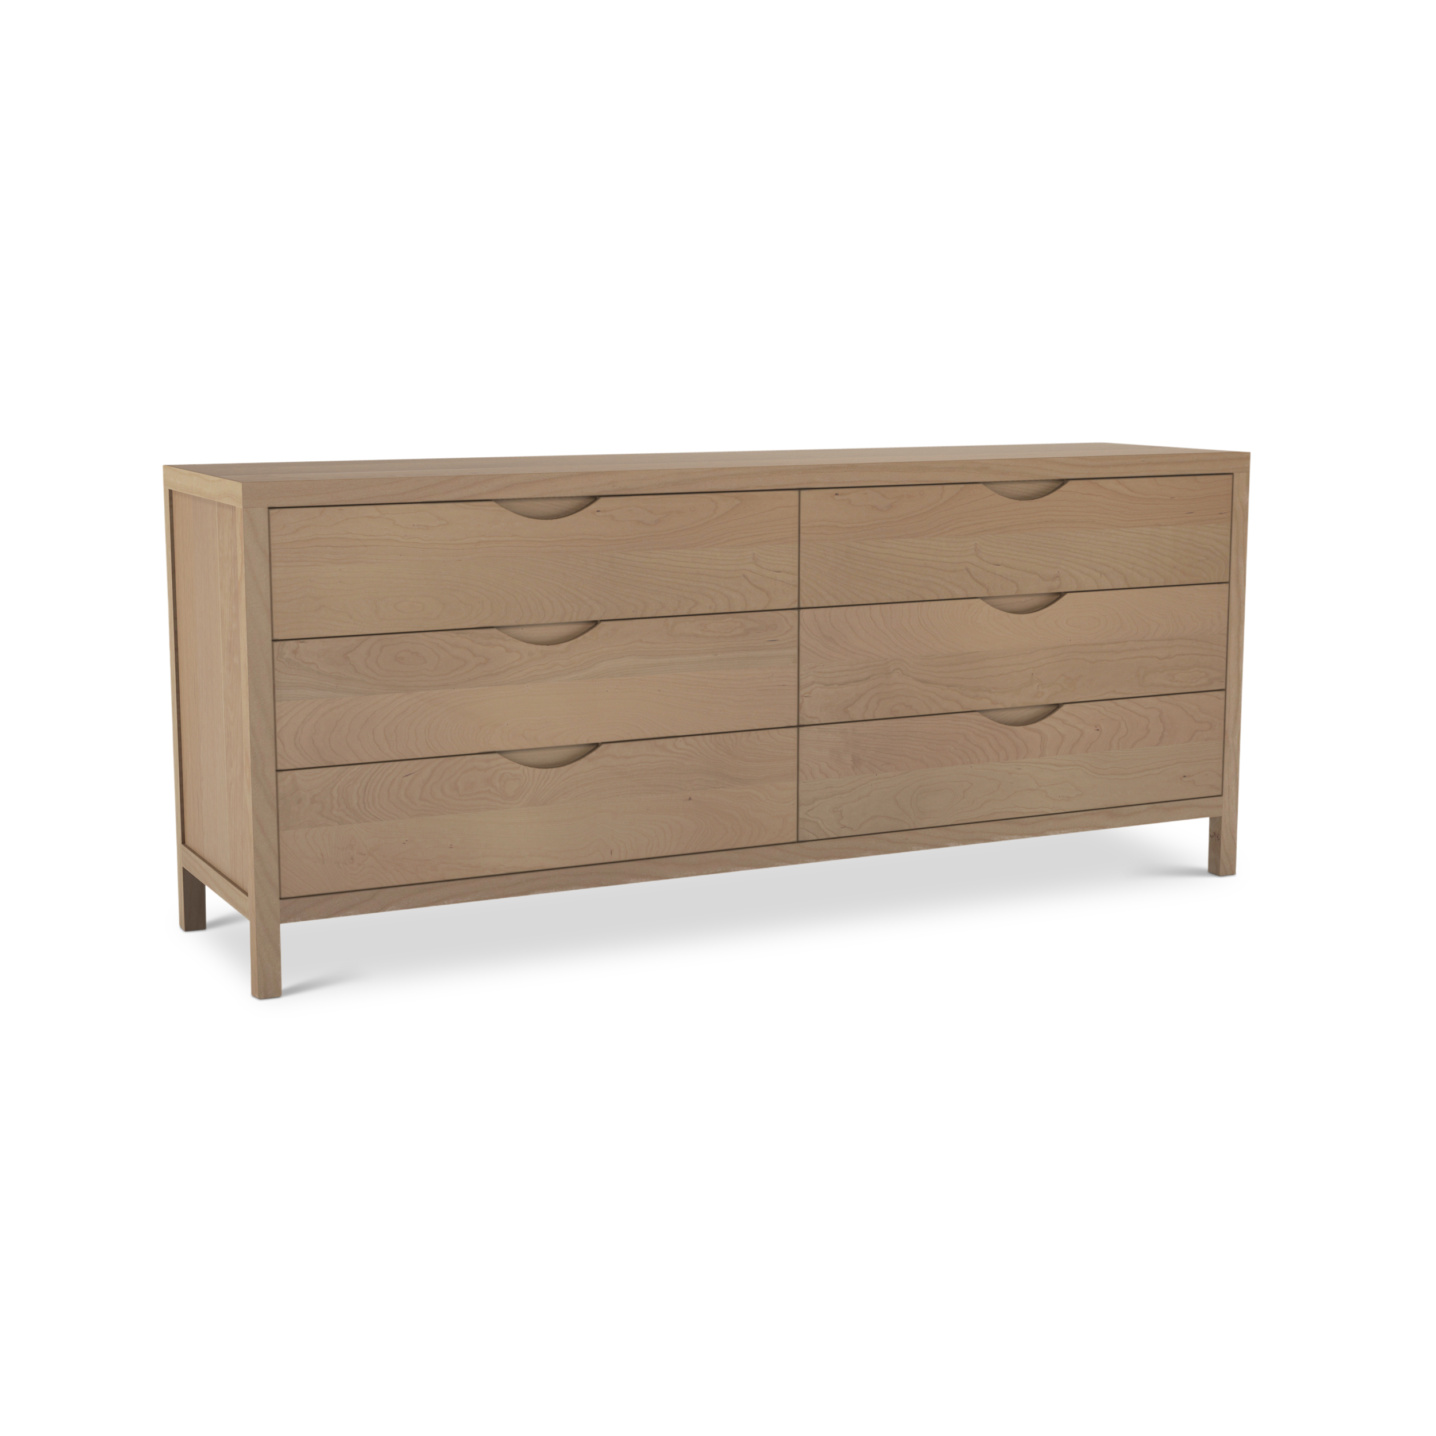 Six drawer cherry wood dresser